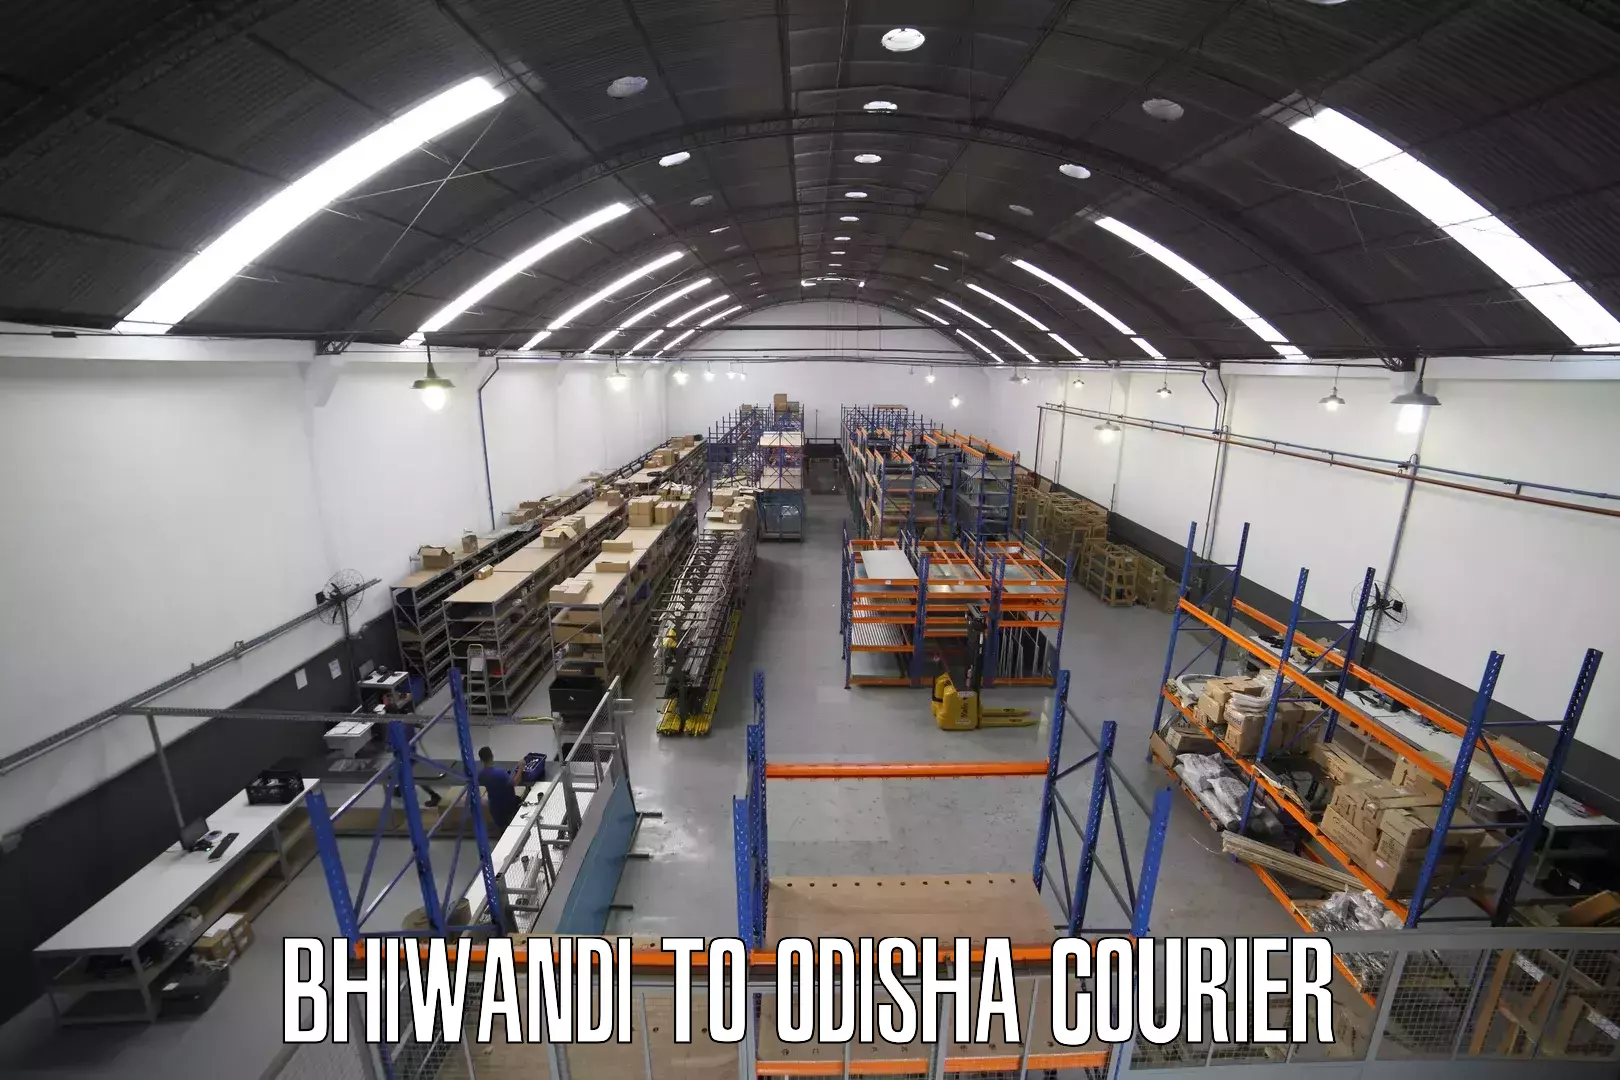 Professional courier handling Bhiwandi to Chandbali